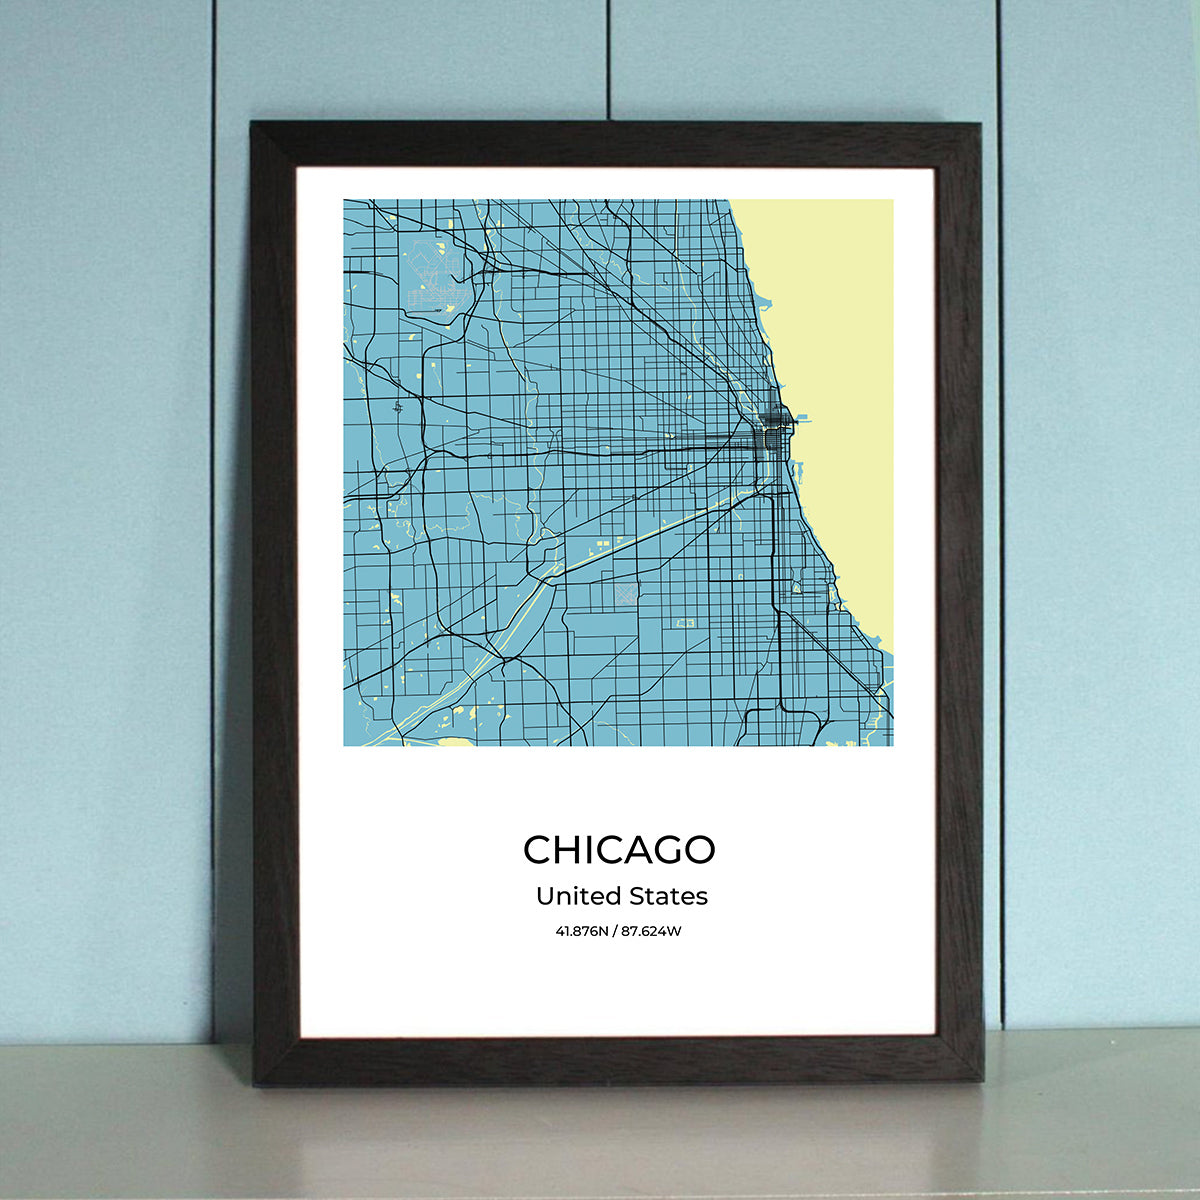 Chicago City Map Wall Art